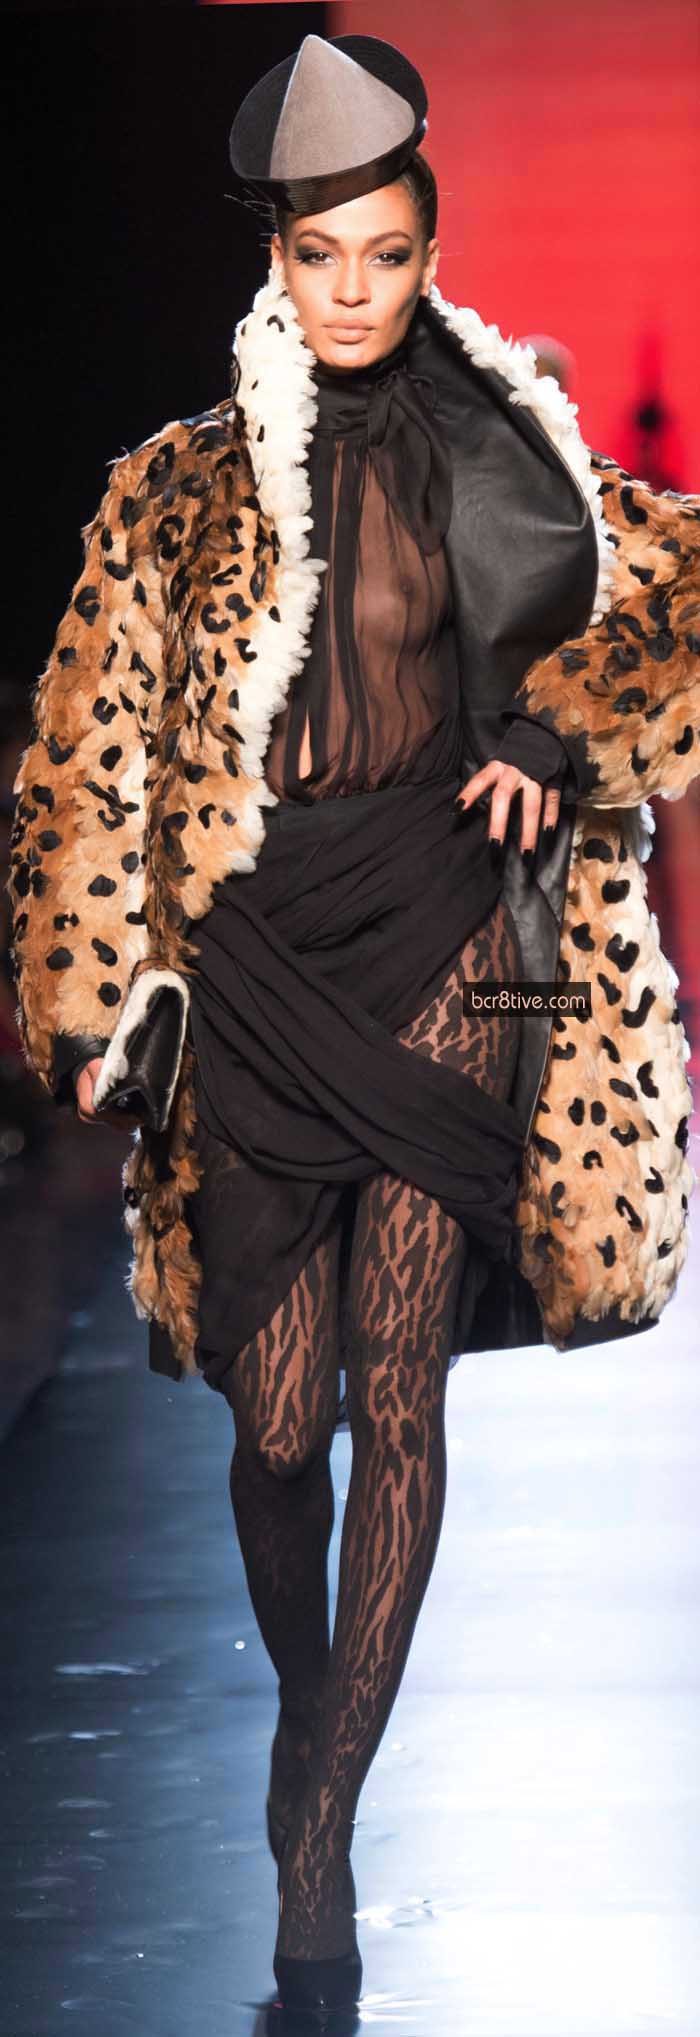 Jean Paul Gaultier Fall Winter 2013-14 Haute Couture